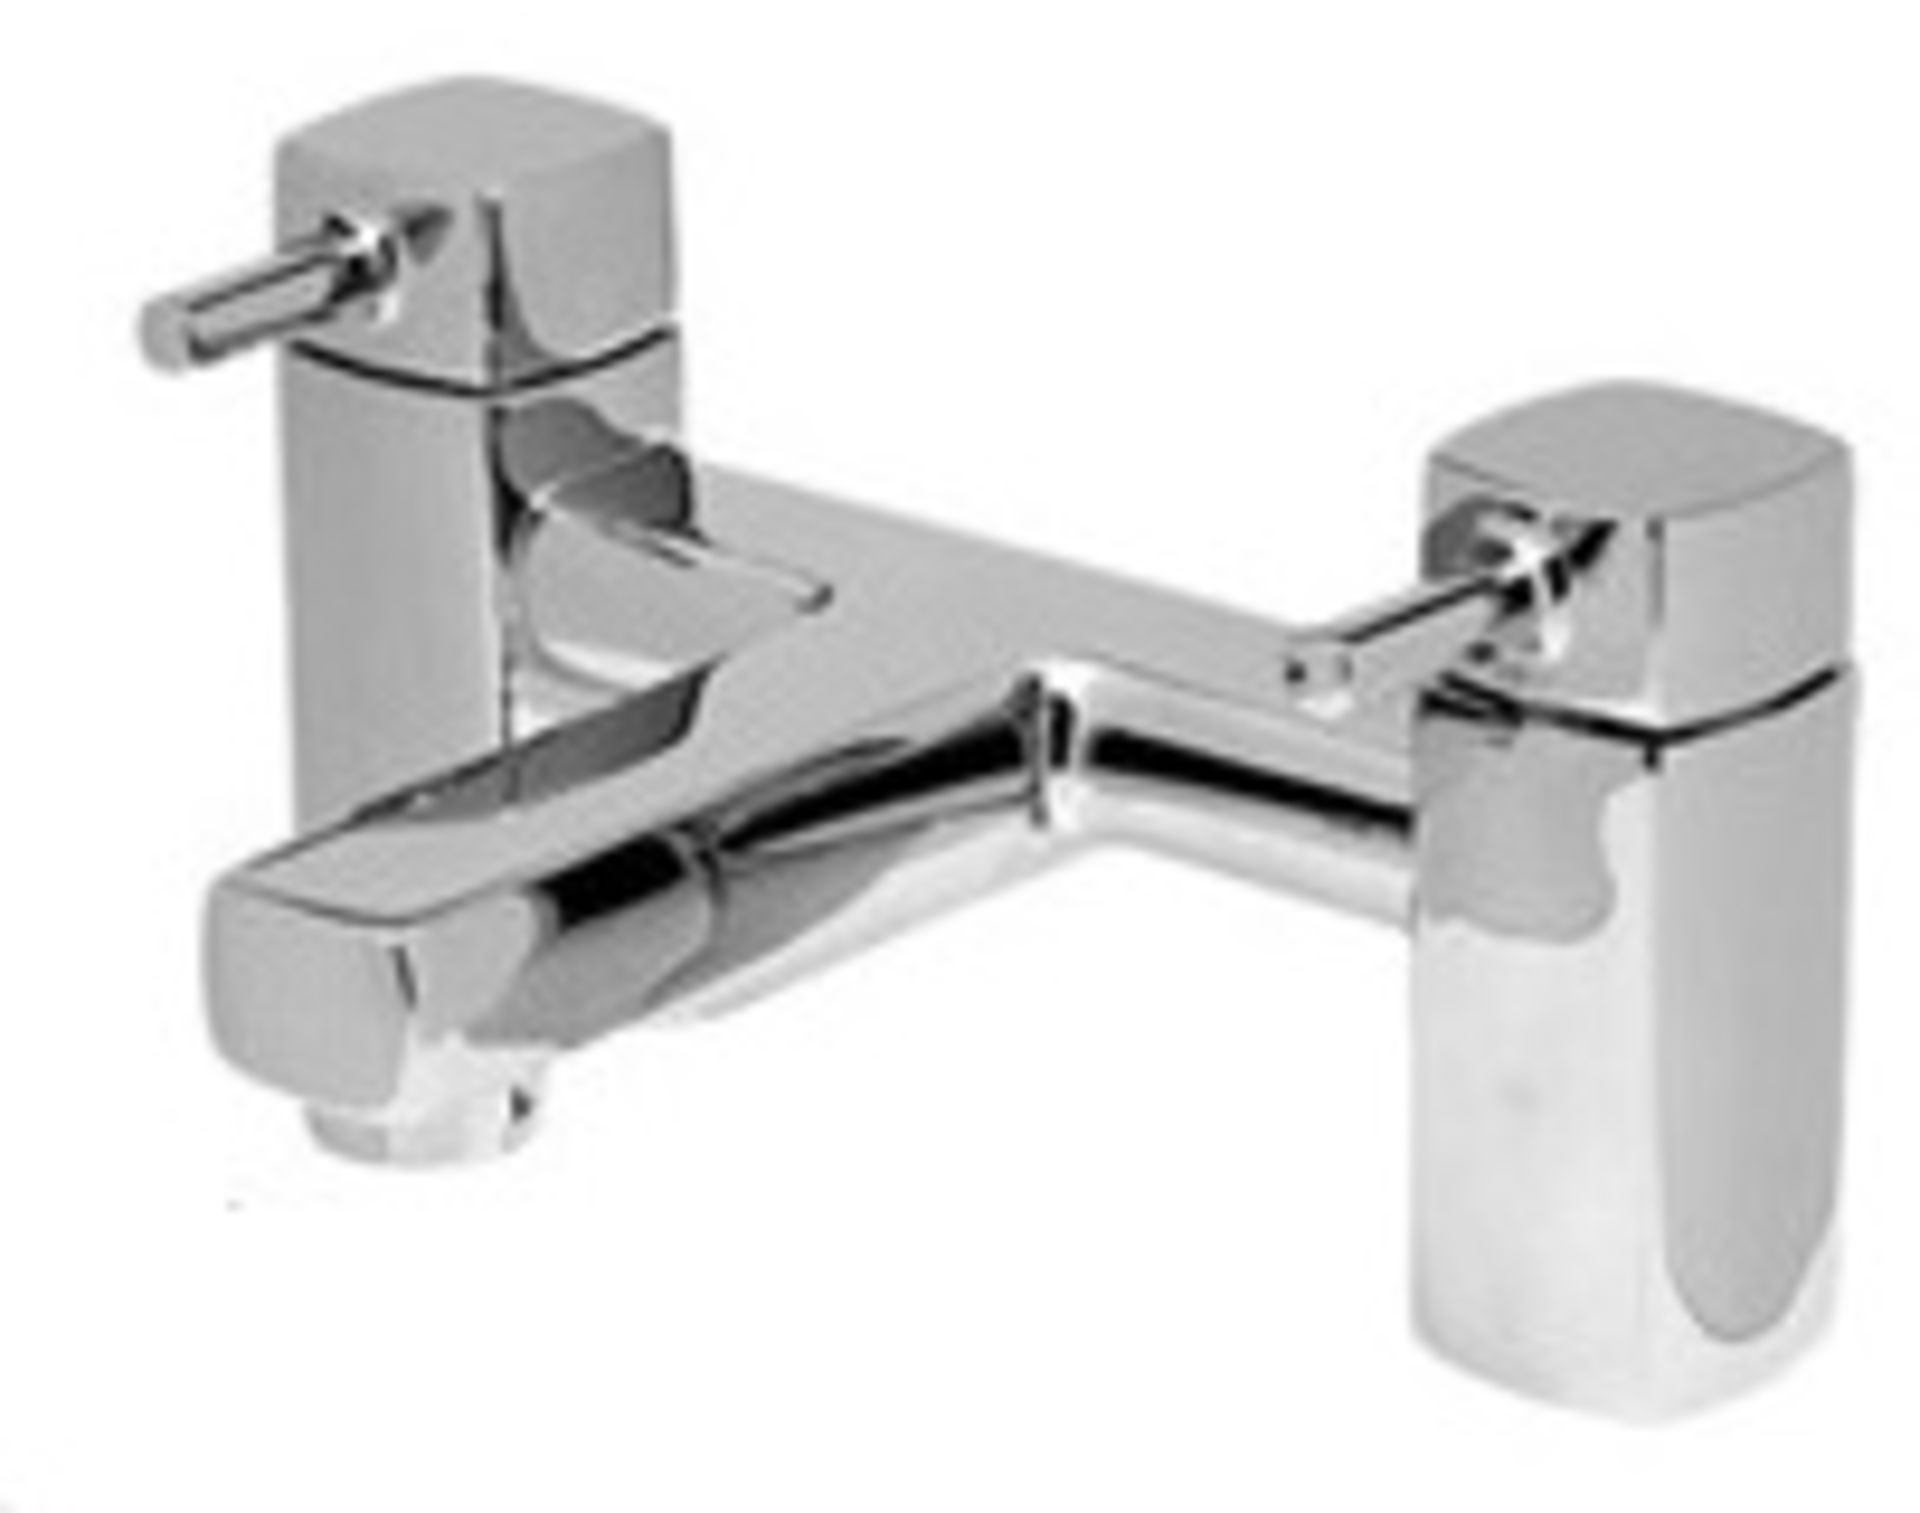 Quadro modern bath mixer tap - Image 2 of 2